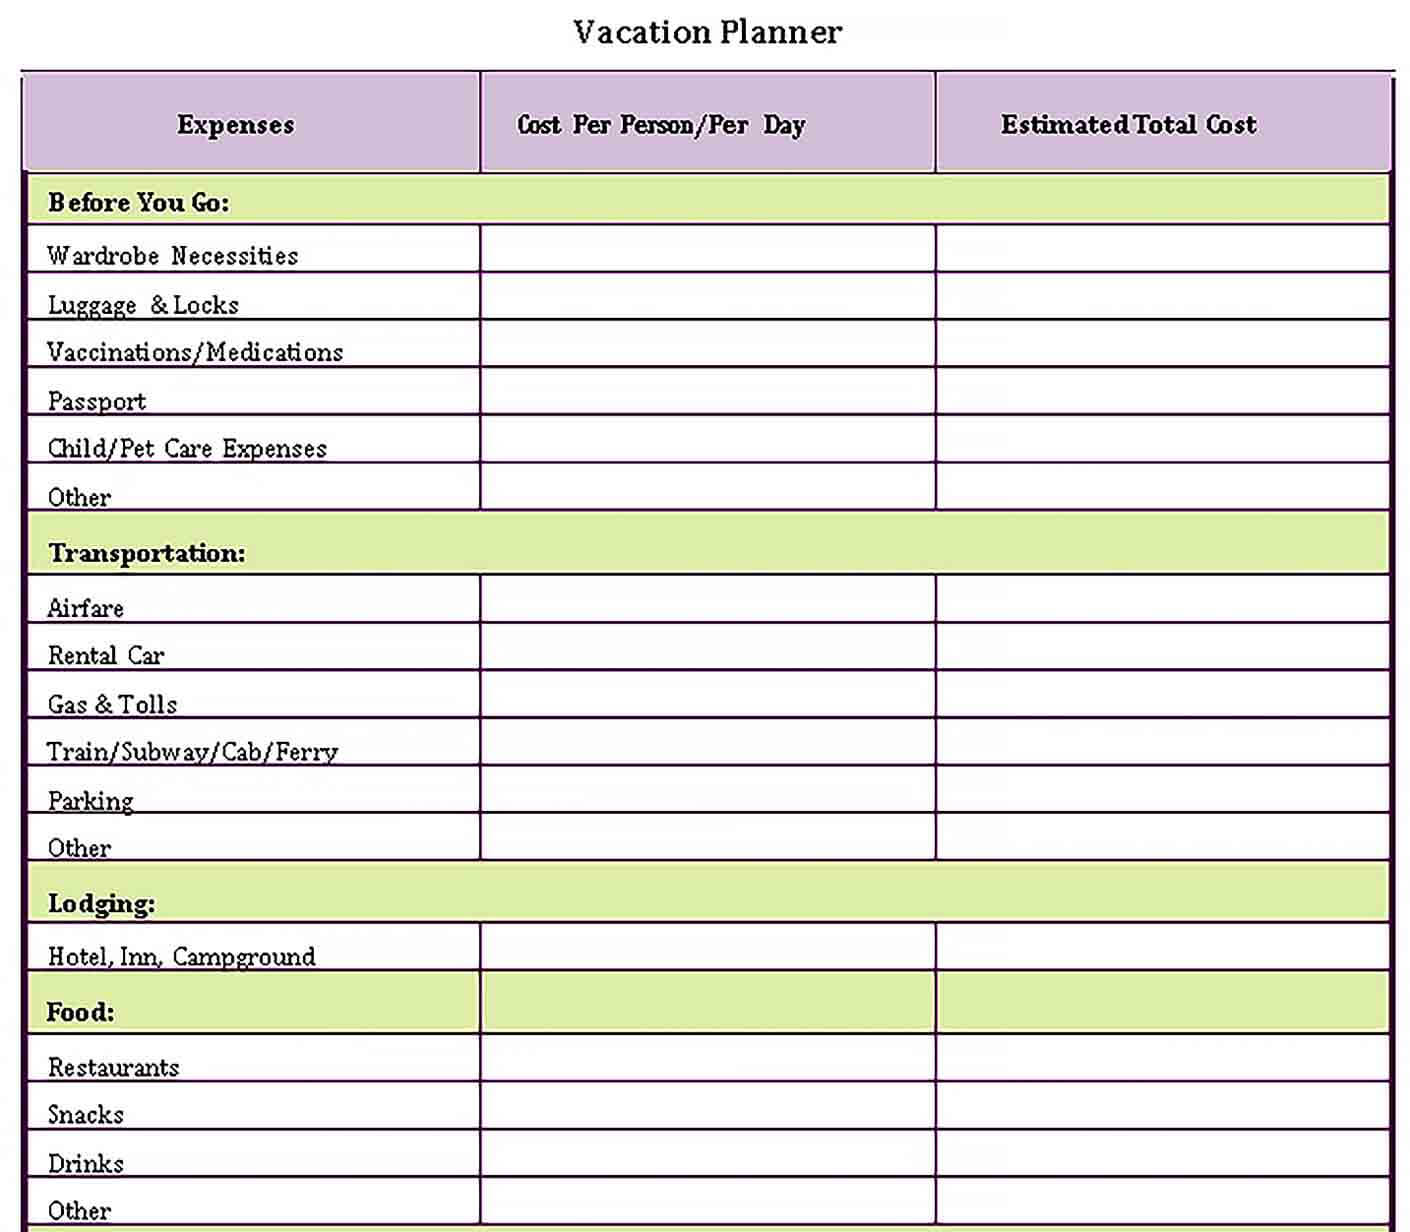 Sample Vacation Planning Checklist